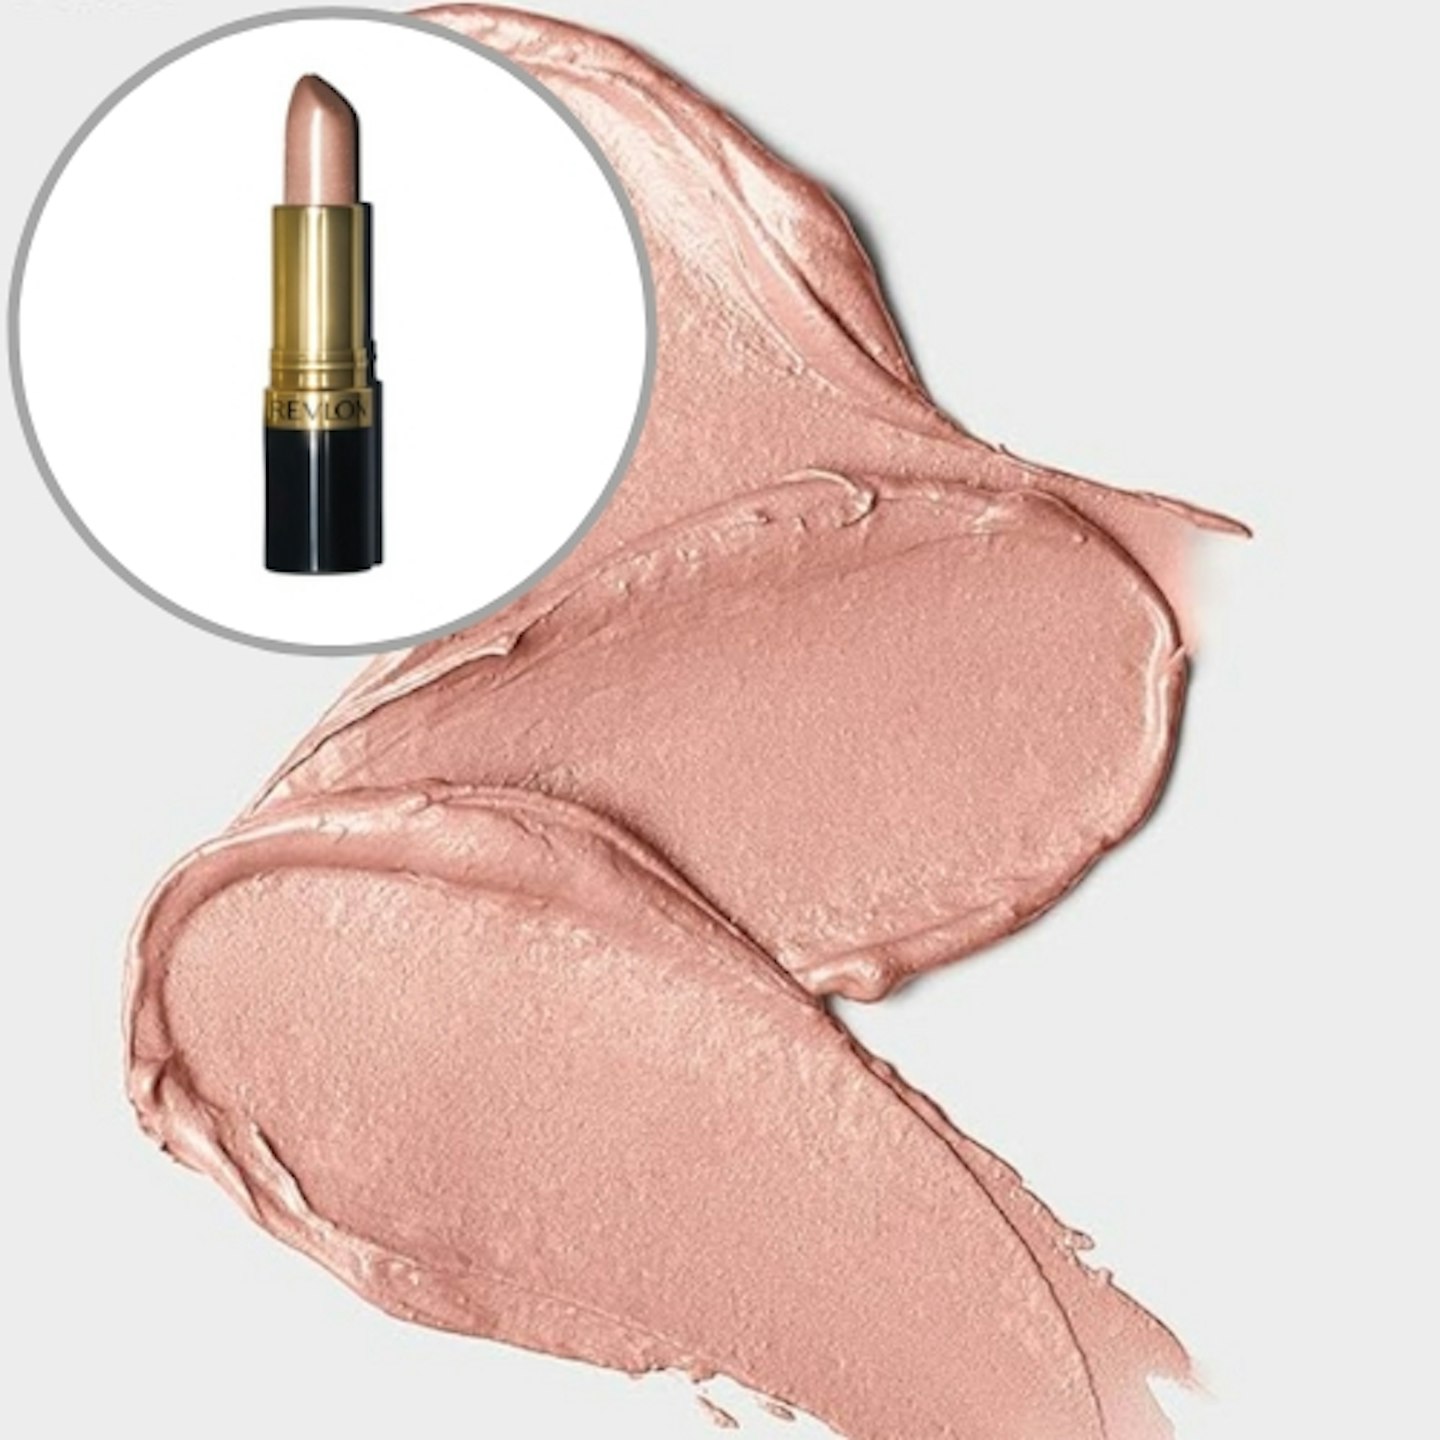 Revlon Super Lustrous Lipstick in Sky Line Pink